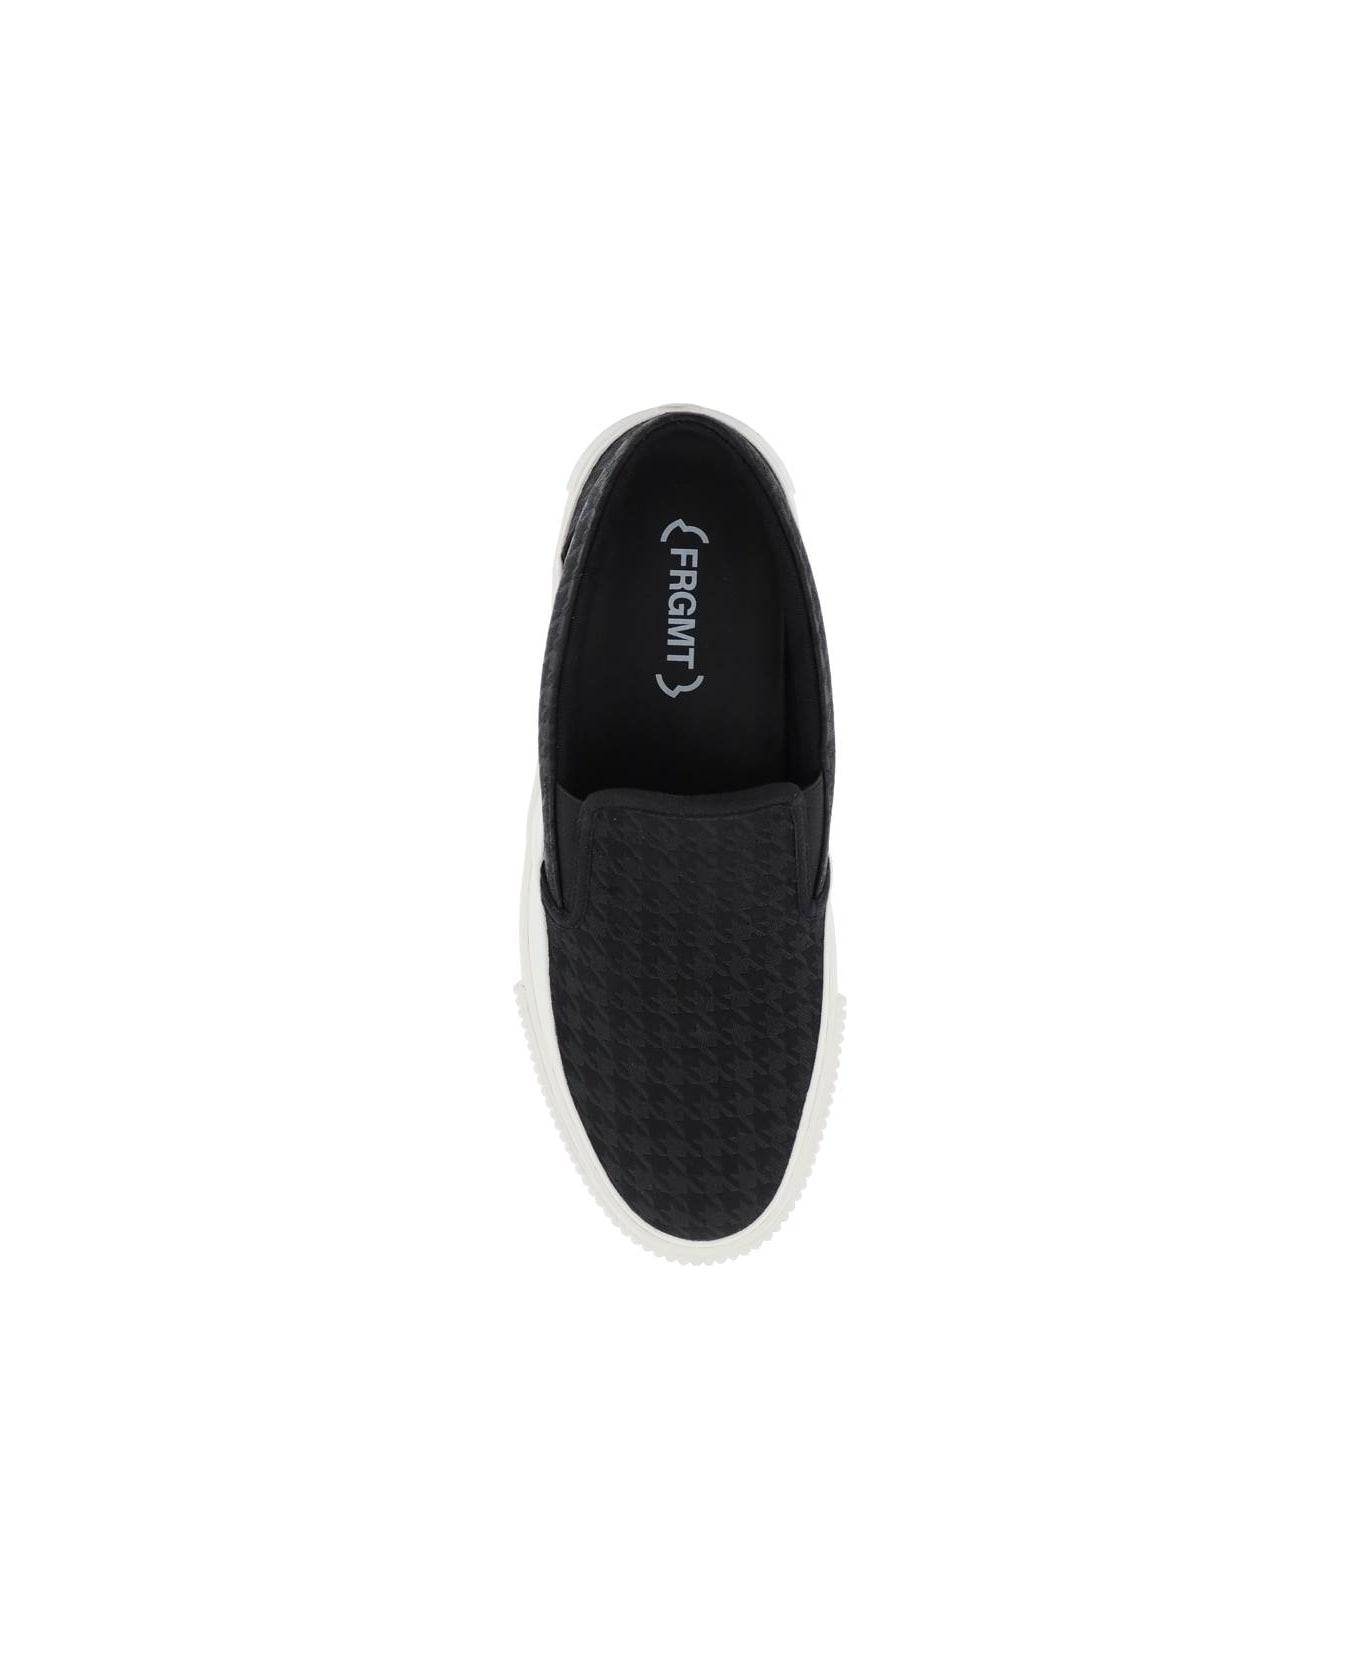 Moncler Genius Moncler X Frgmt - Vulcan Slip-on Sneakers - Black